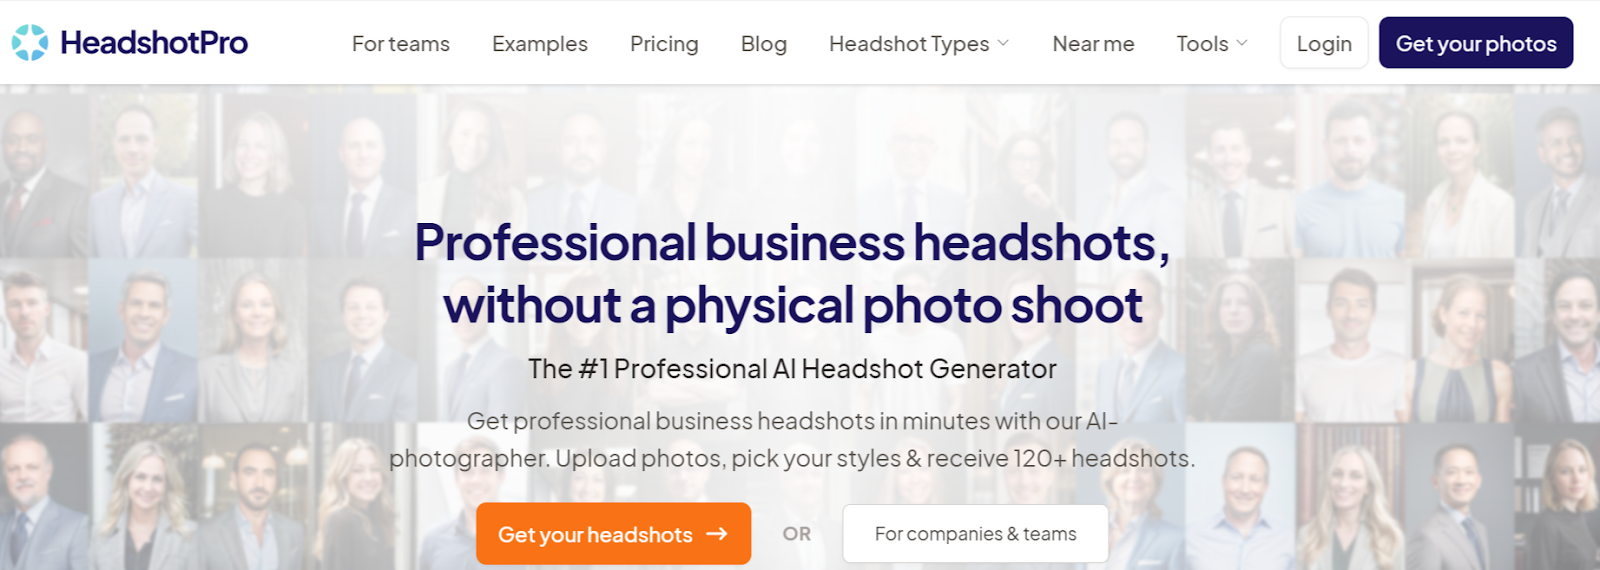 Headshot Pro website